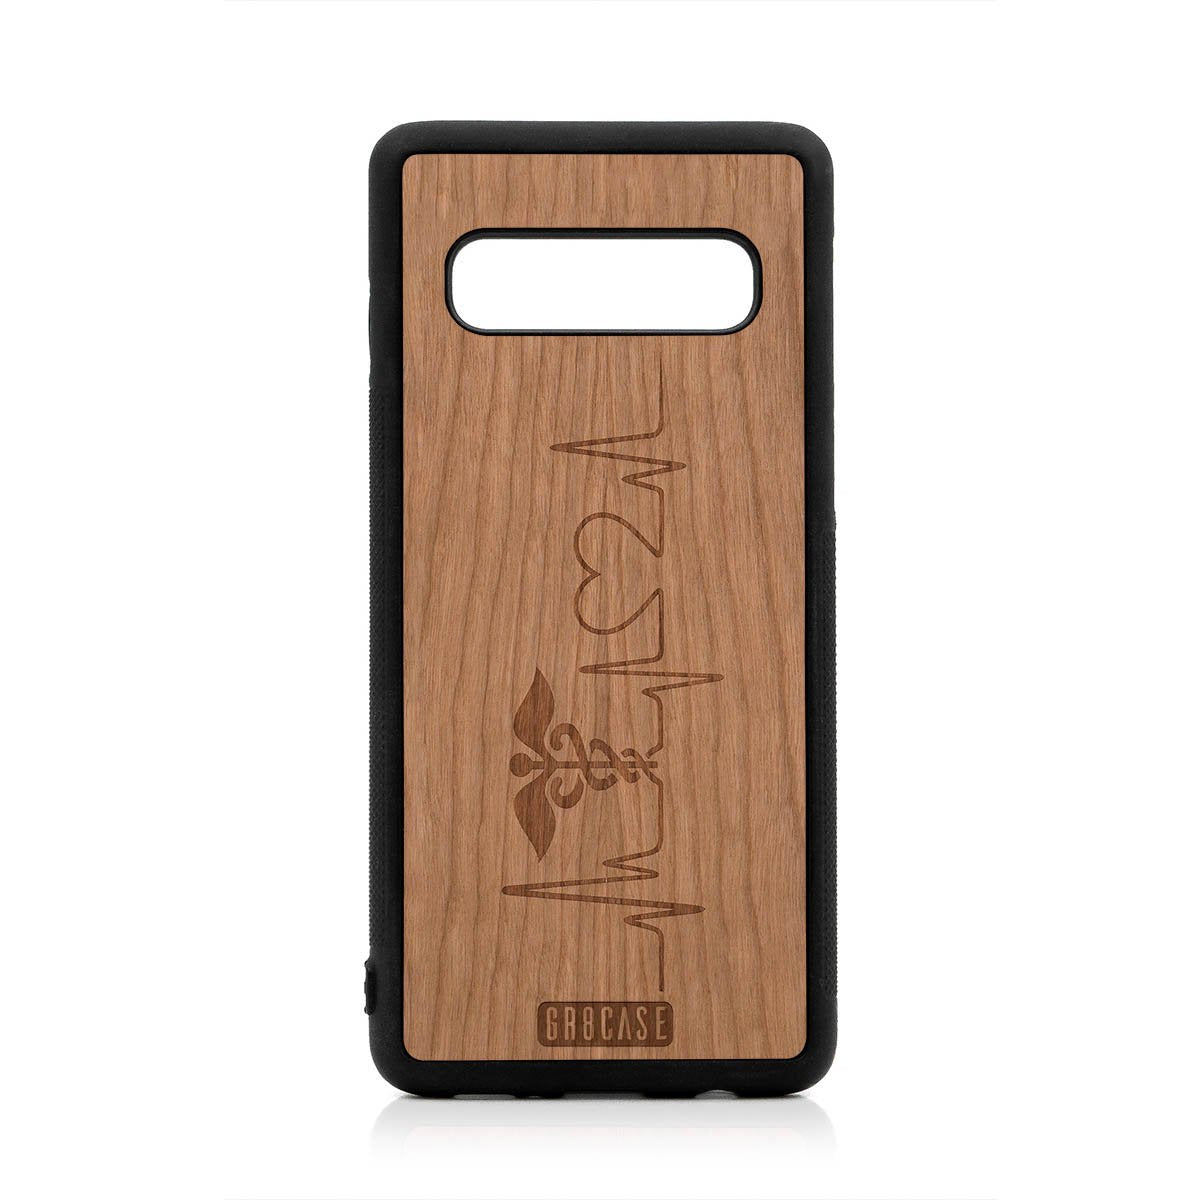 Hero's Heart (Nurse, Doctor) Design Wood Case For Samsung Galaxy S10 by GR8CASE